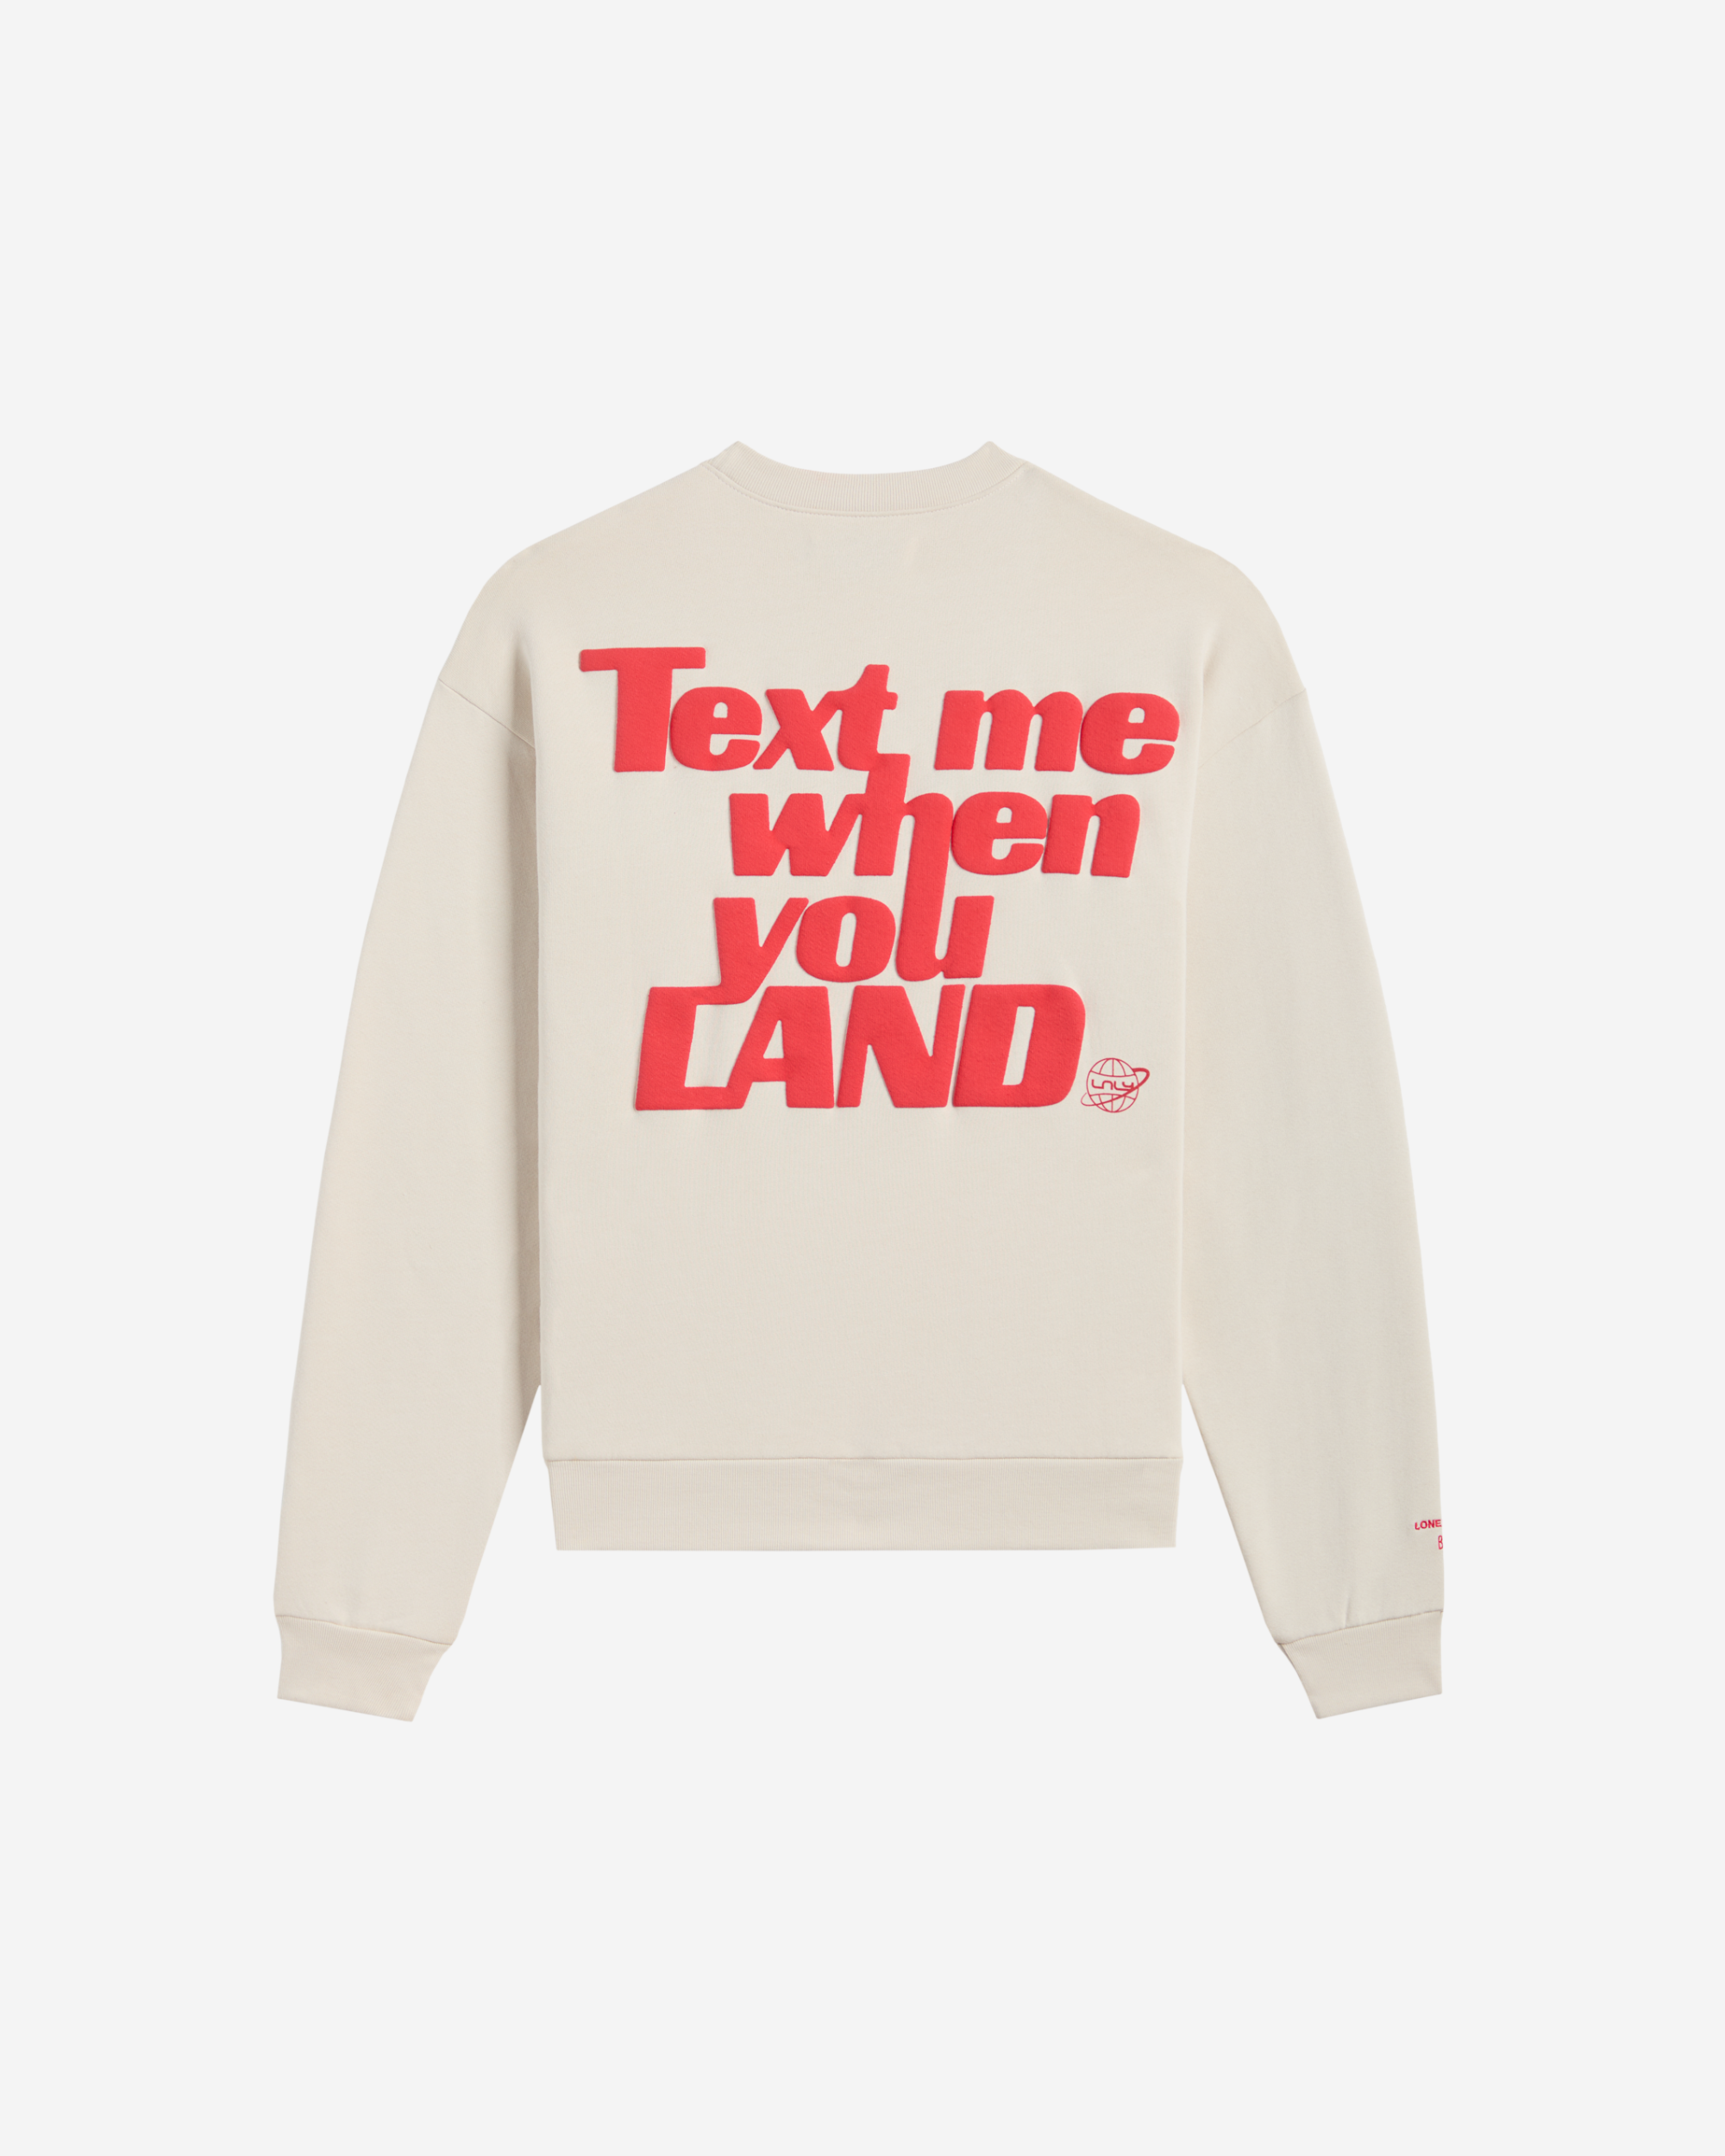 LG x BÉIS Text Me When You Land Crewneck Sweater - Friends & Family